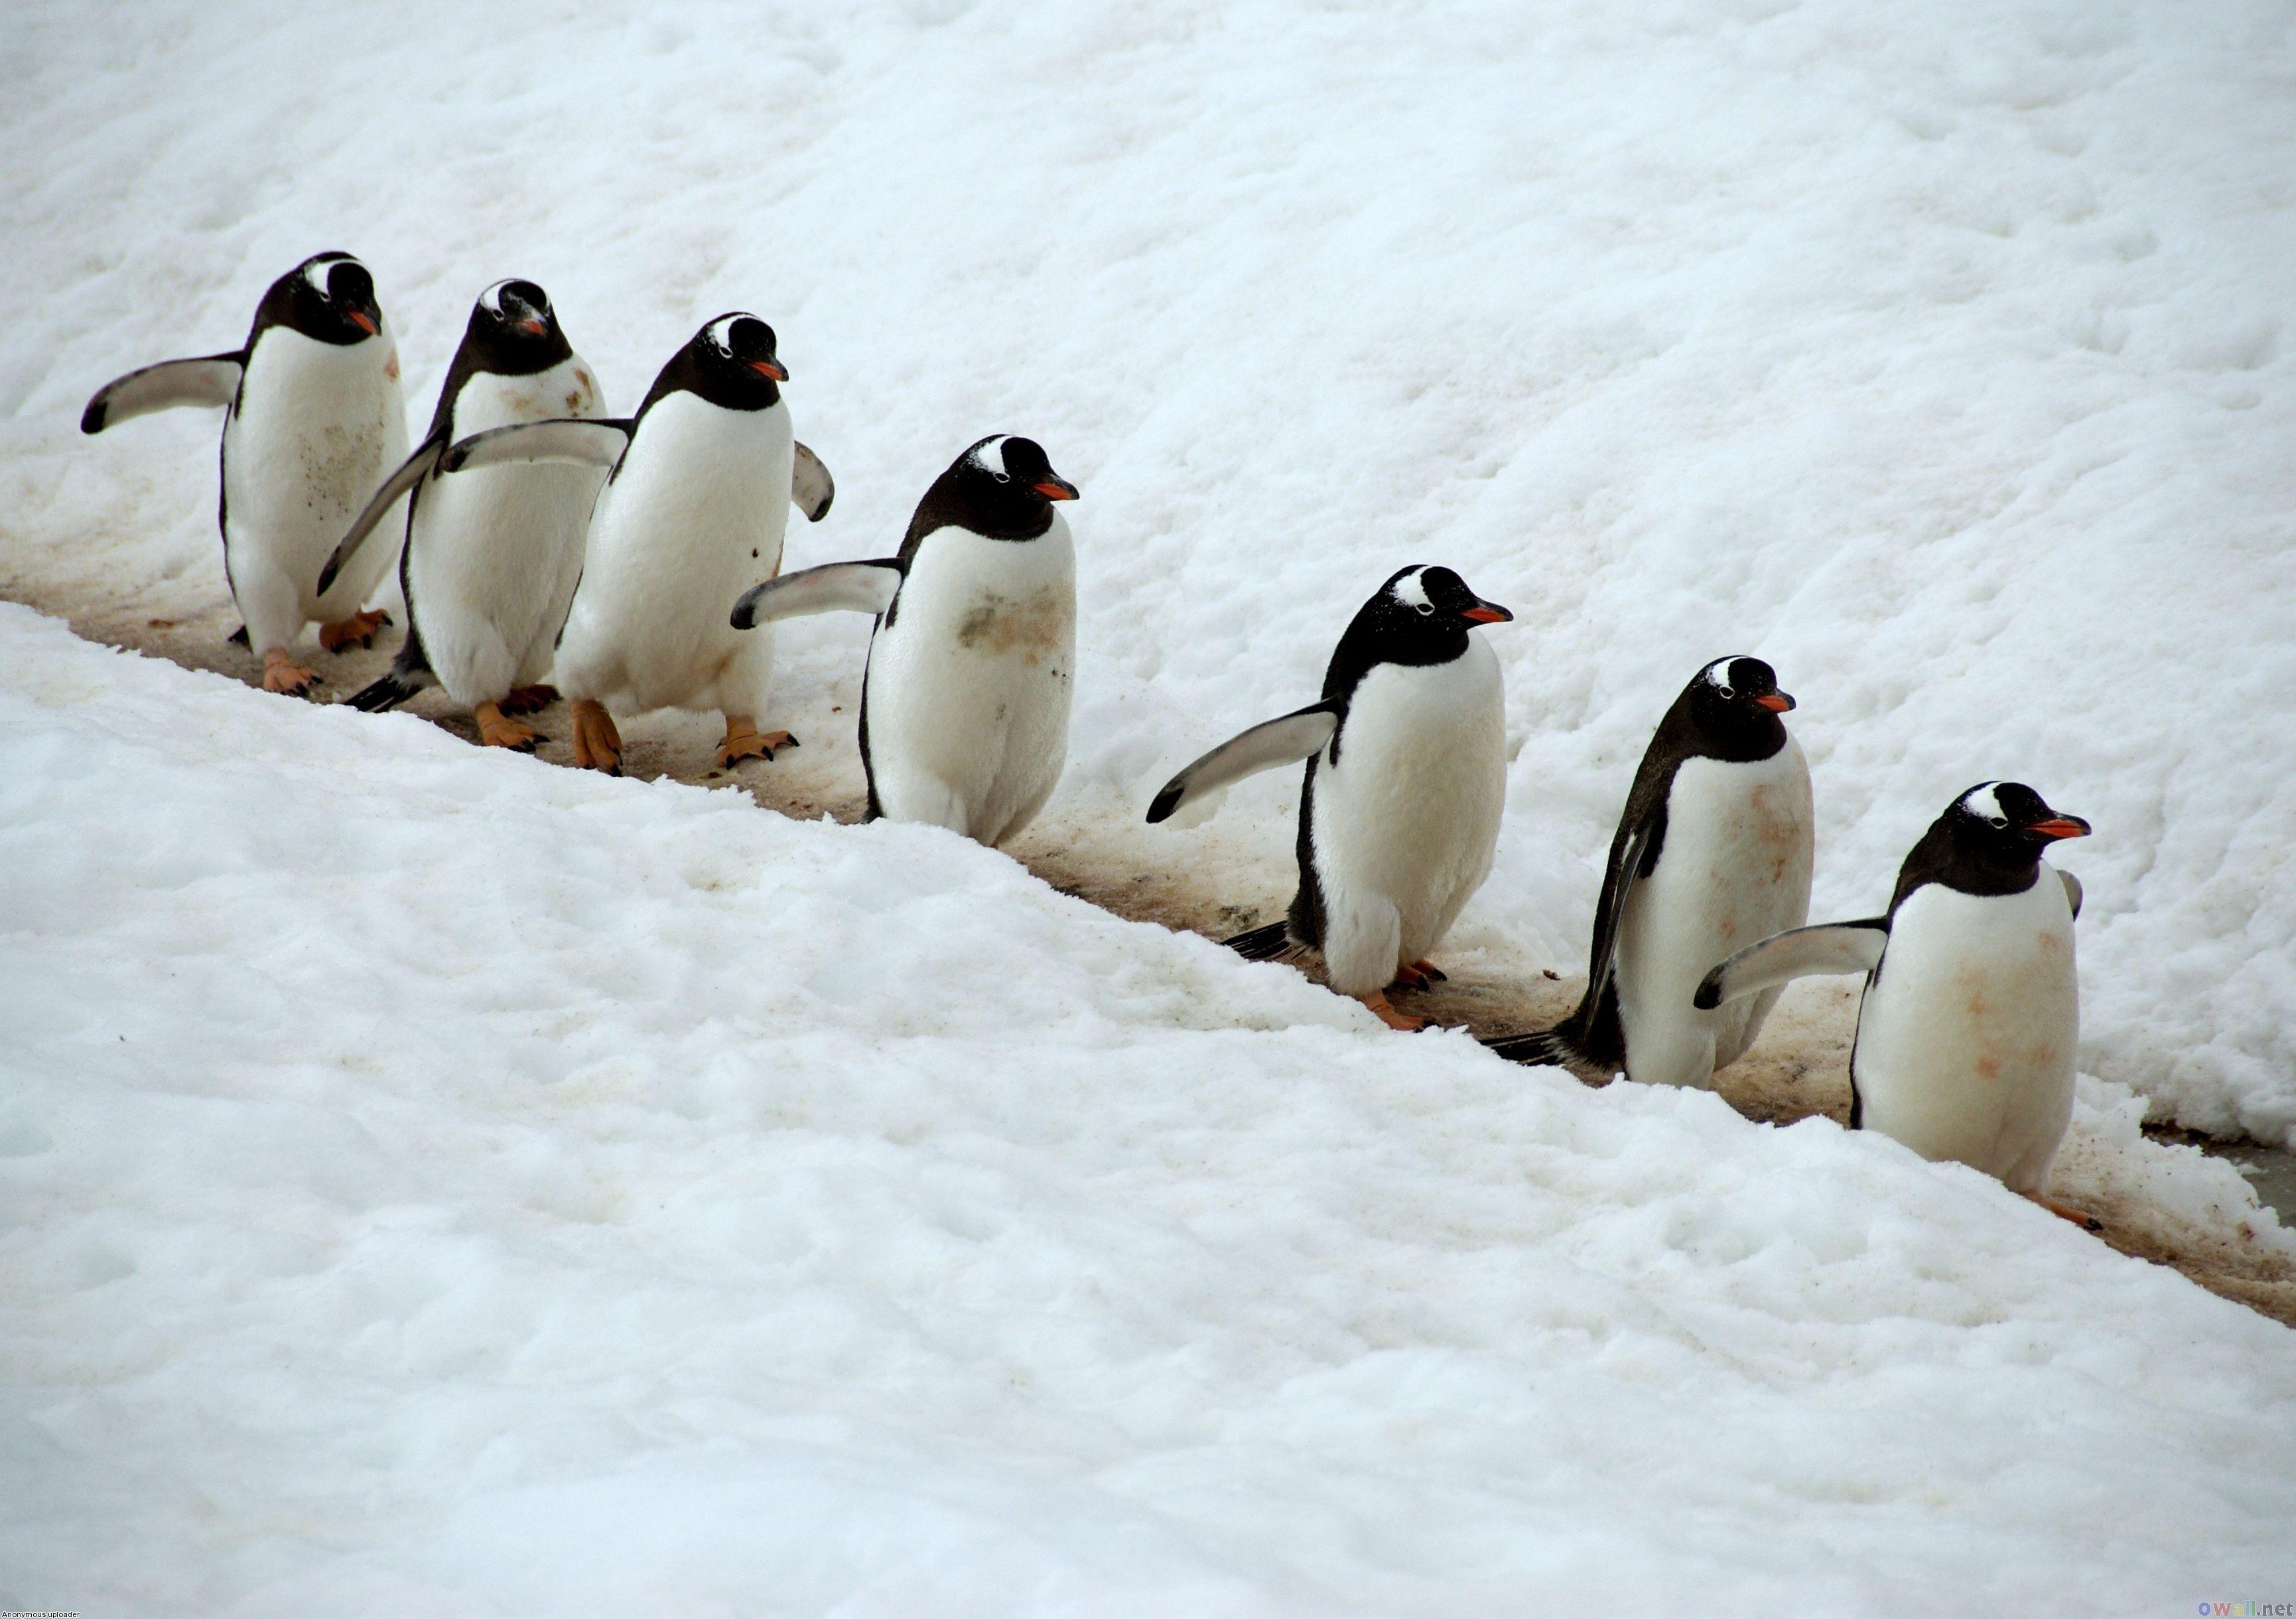 Cute Baby Penguins. Penguins Wallpaper HD. Wallpicshd. Cute